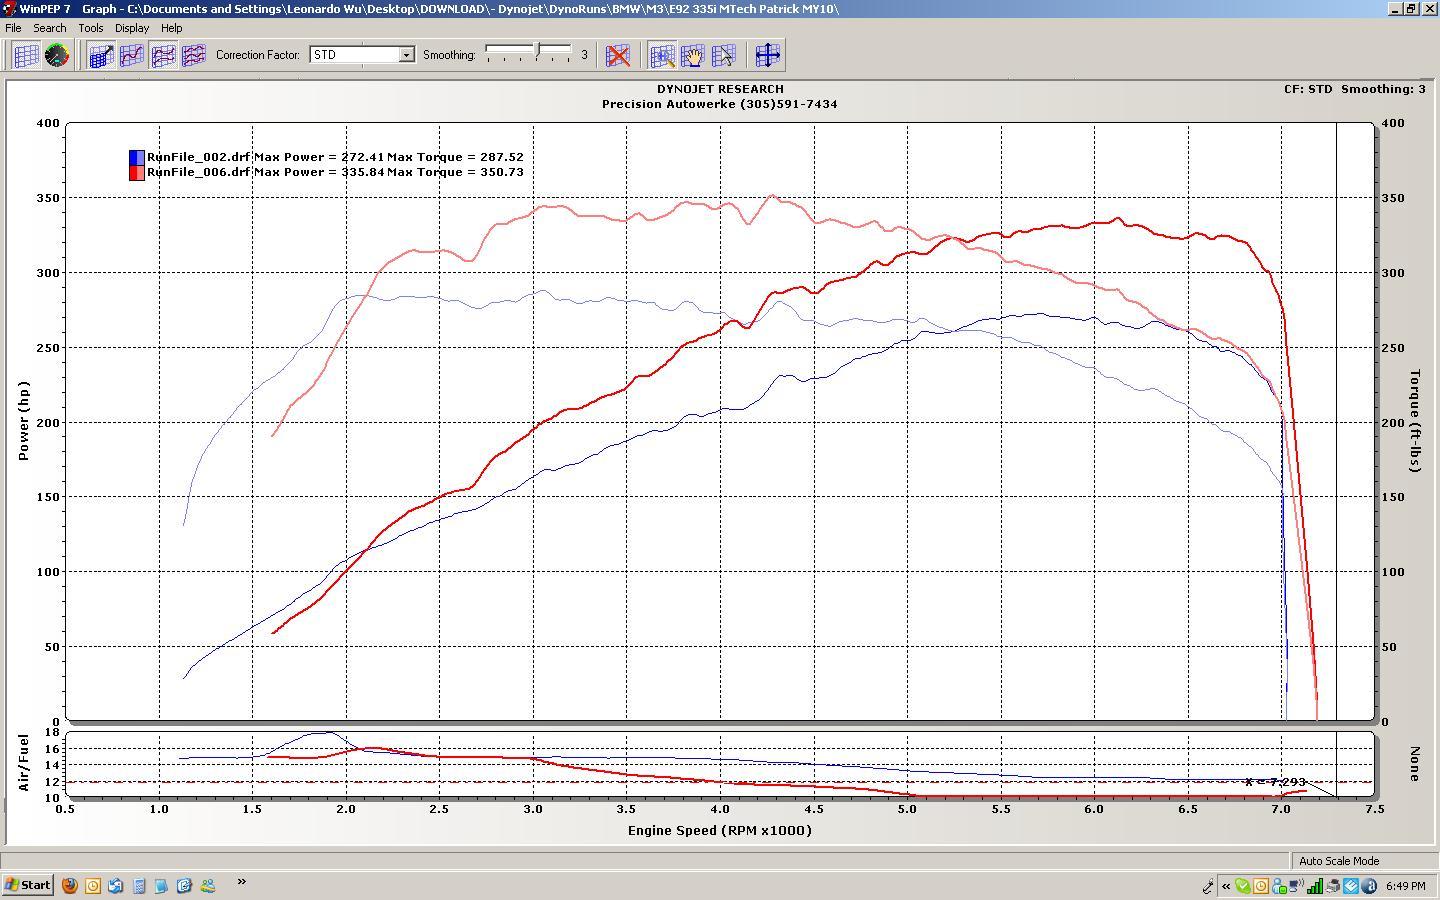 2010  BMW 335i 6spd - Precision Autowerke Dyno Graph